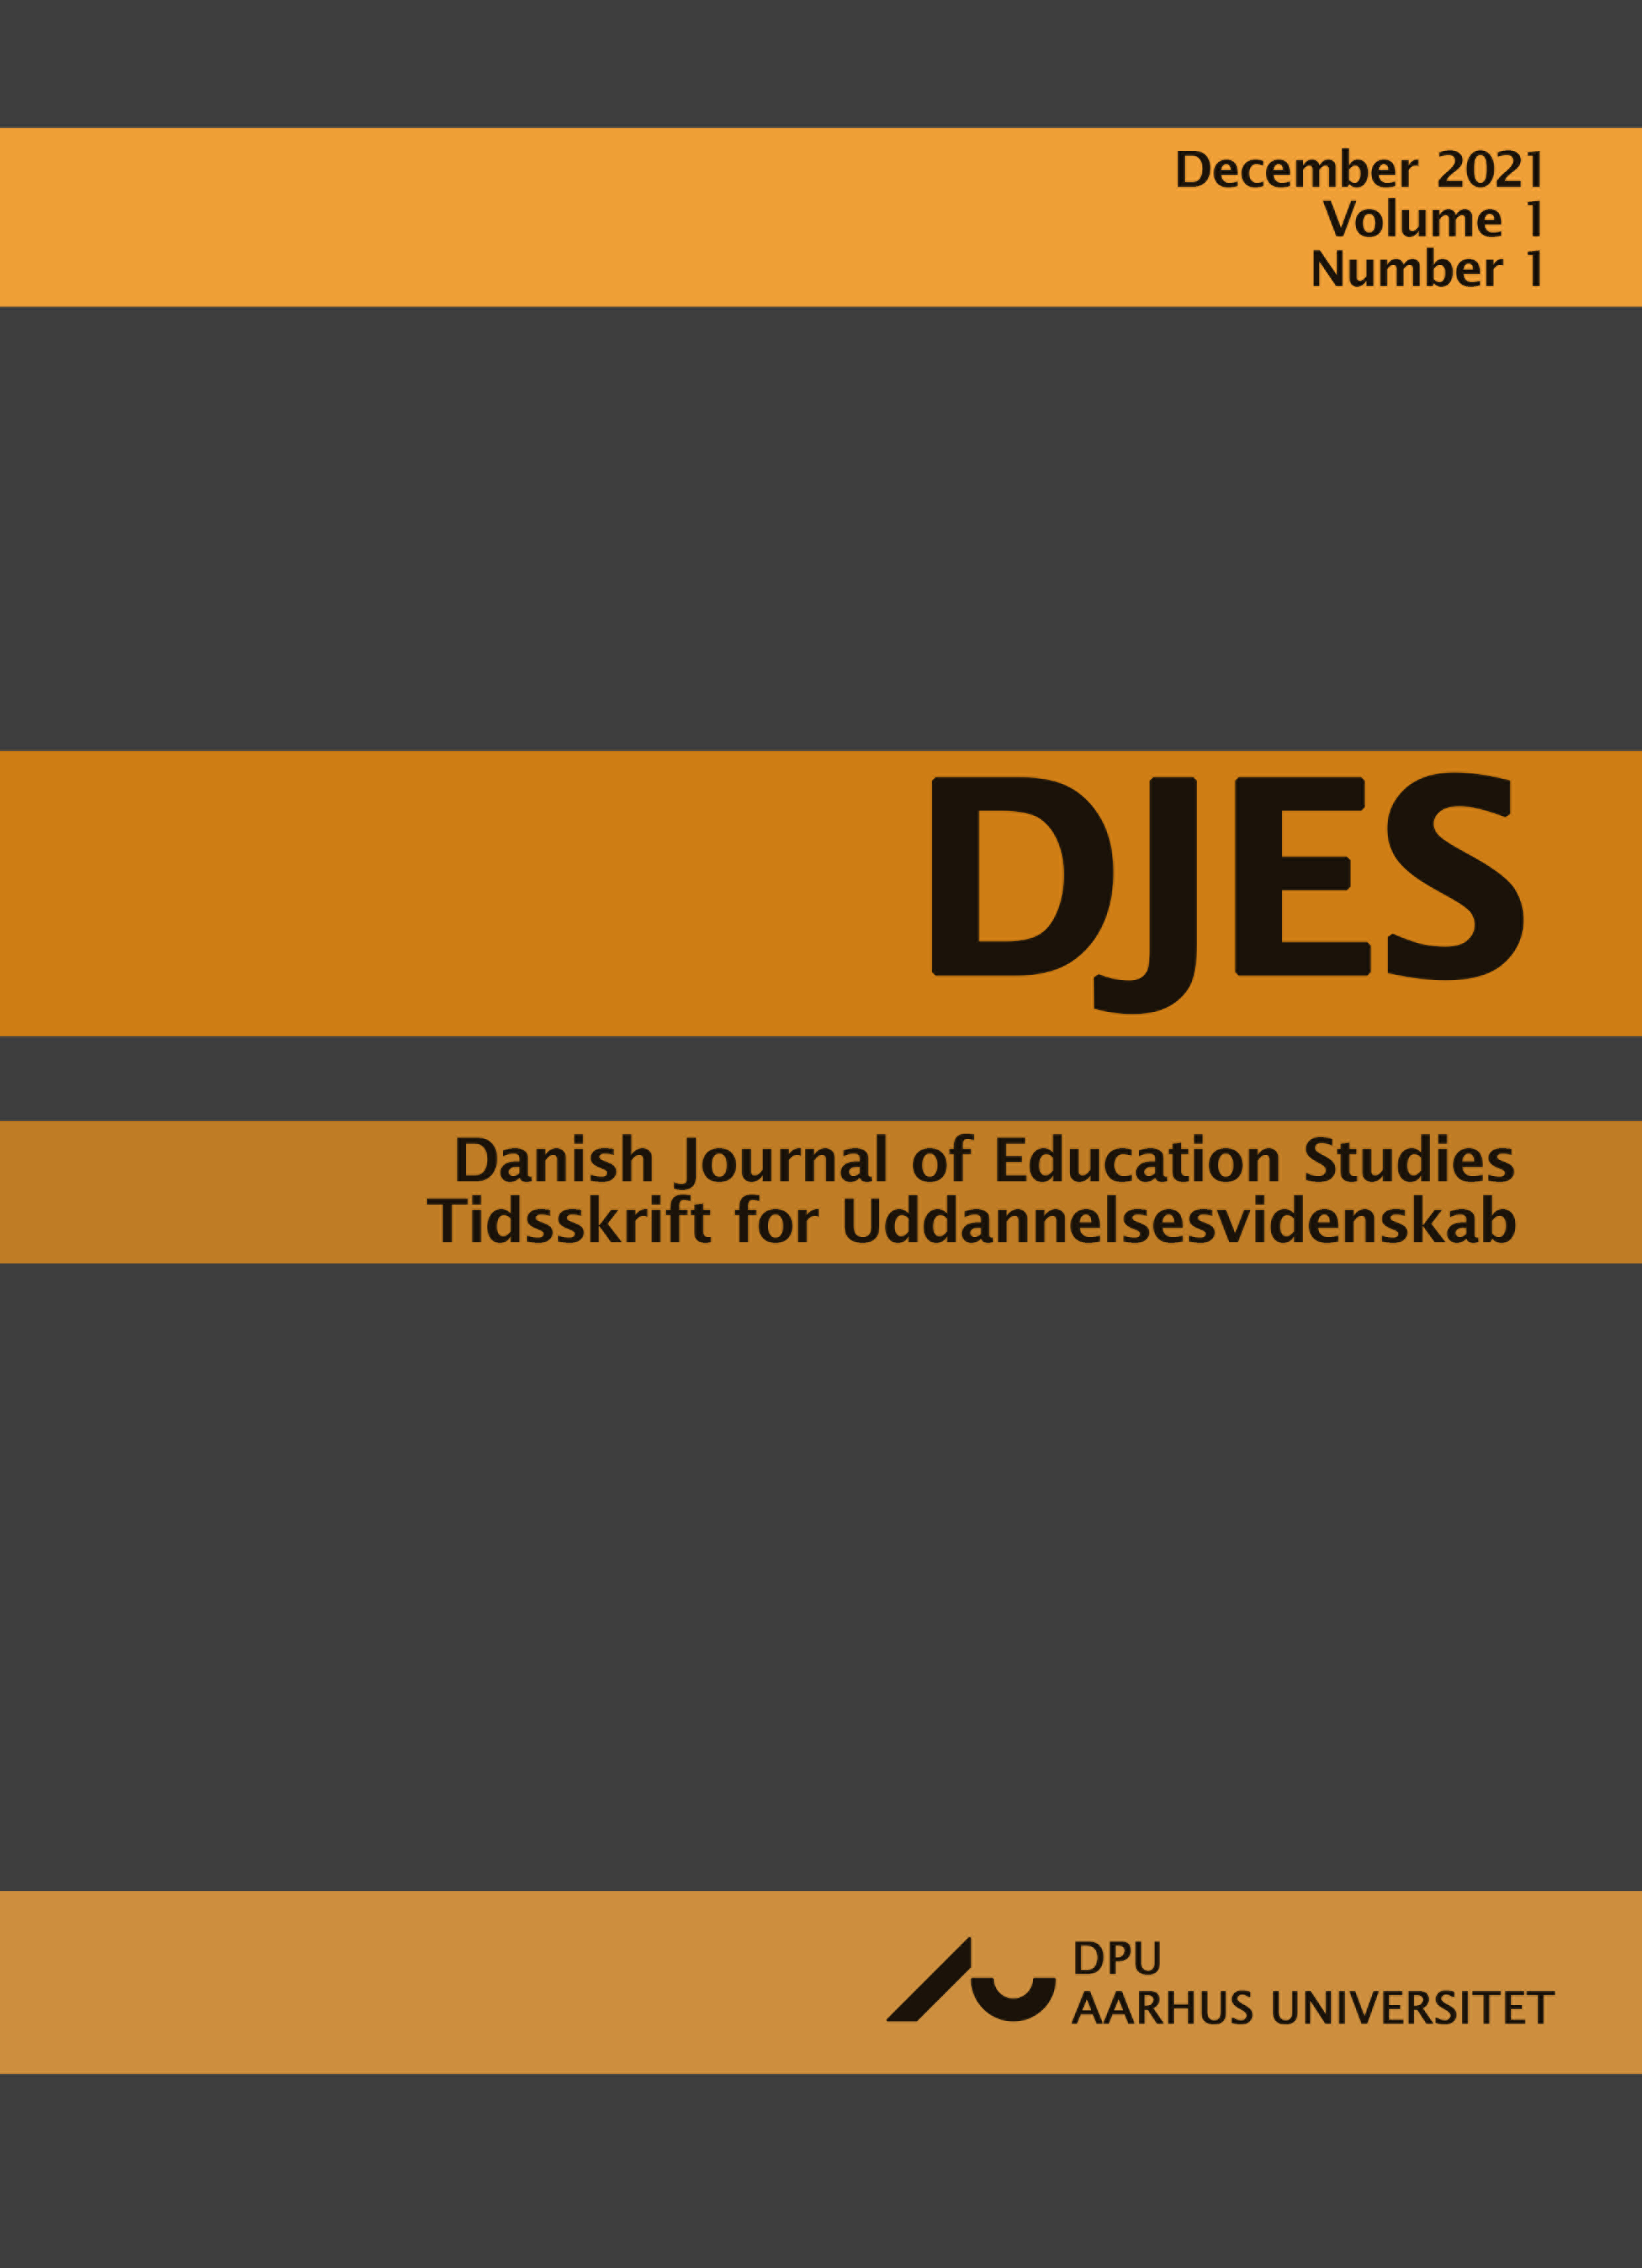 DJES: Danish Journal of Education Studies